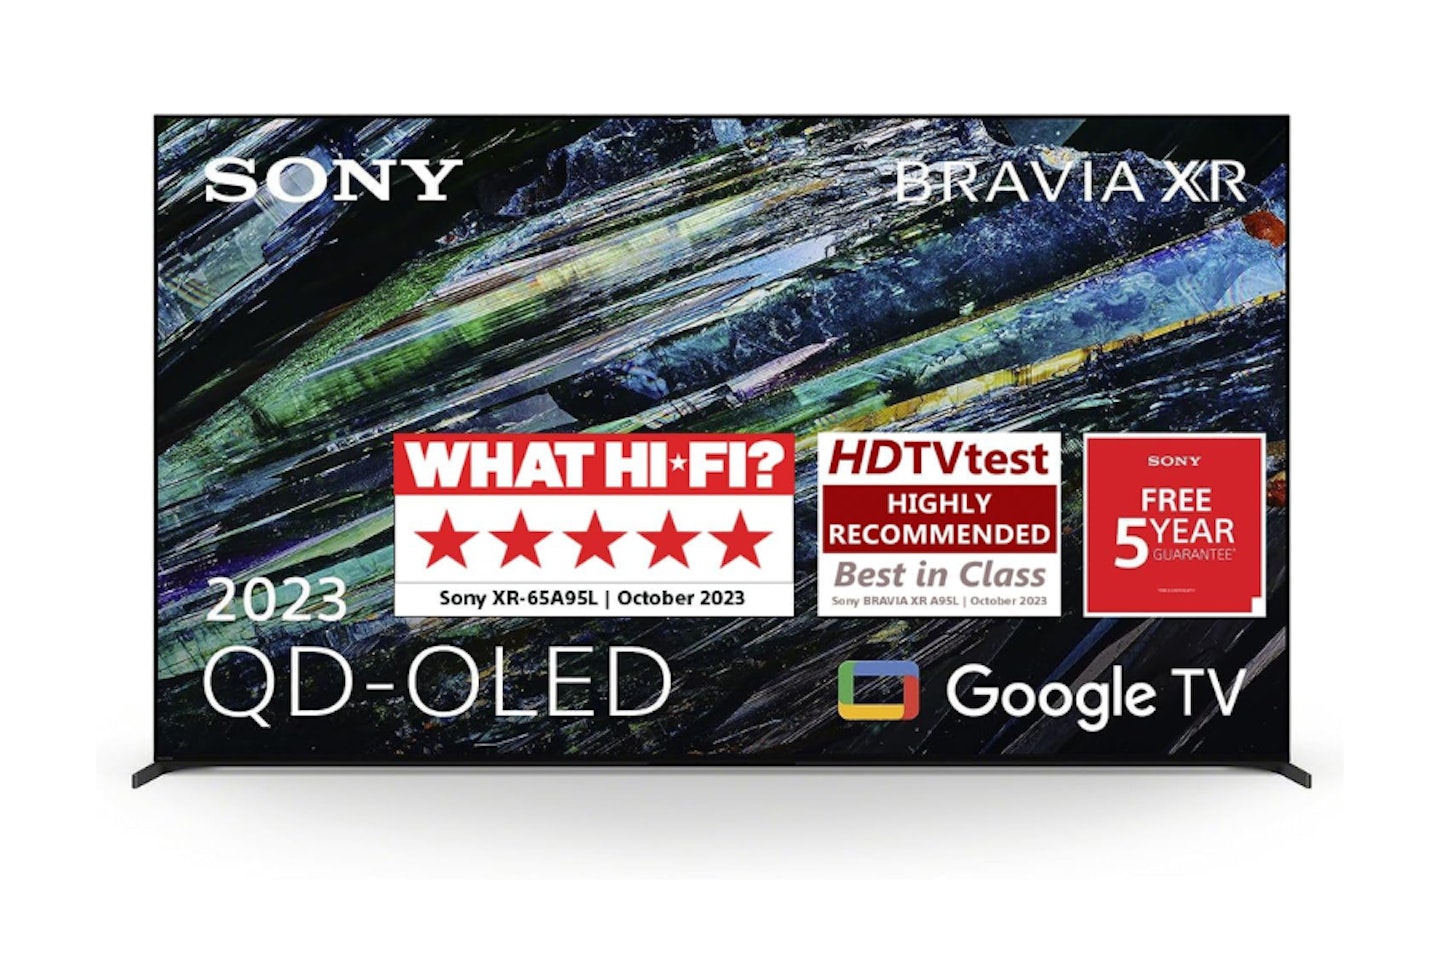 Sony BRAVIA XR XR-55A95L QD-OLED 4K HDR Google TV